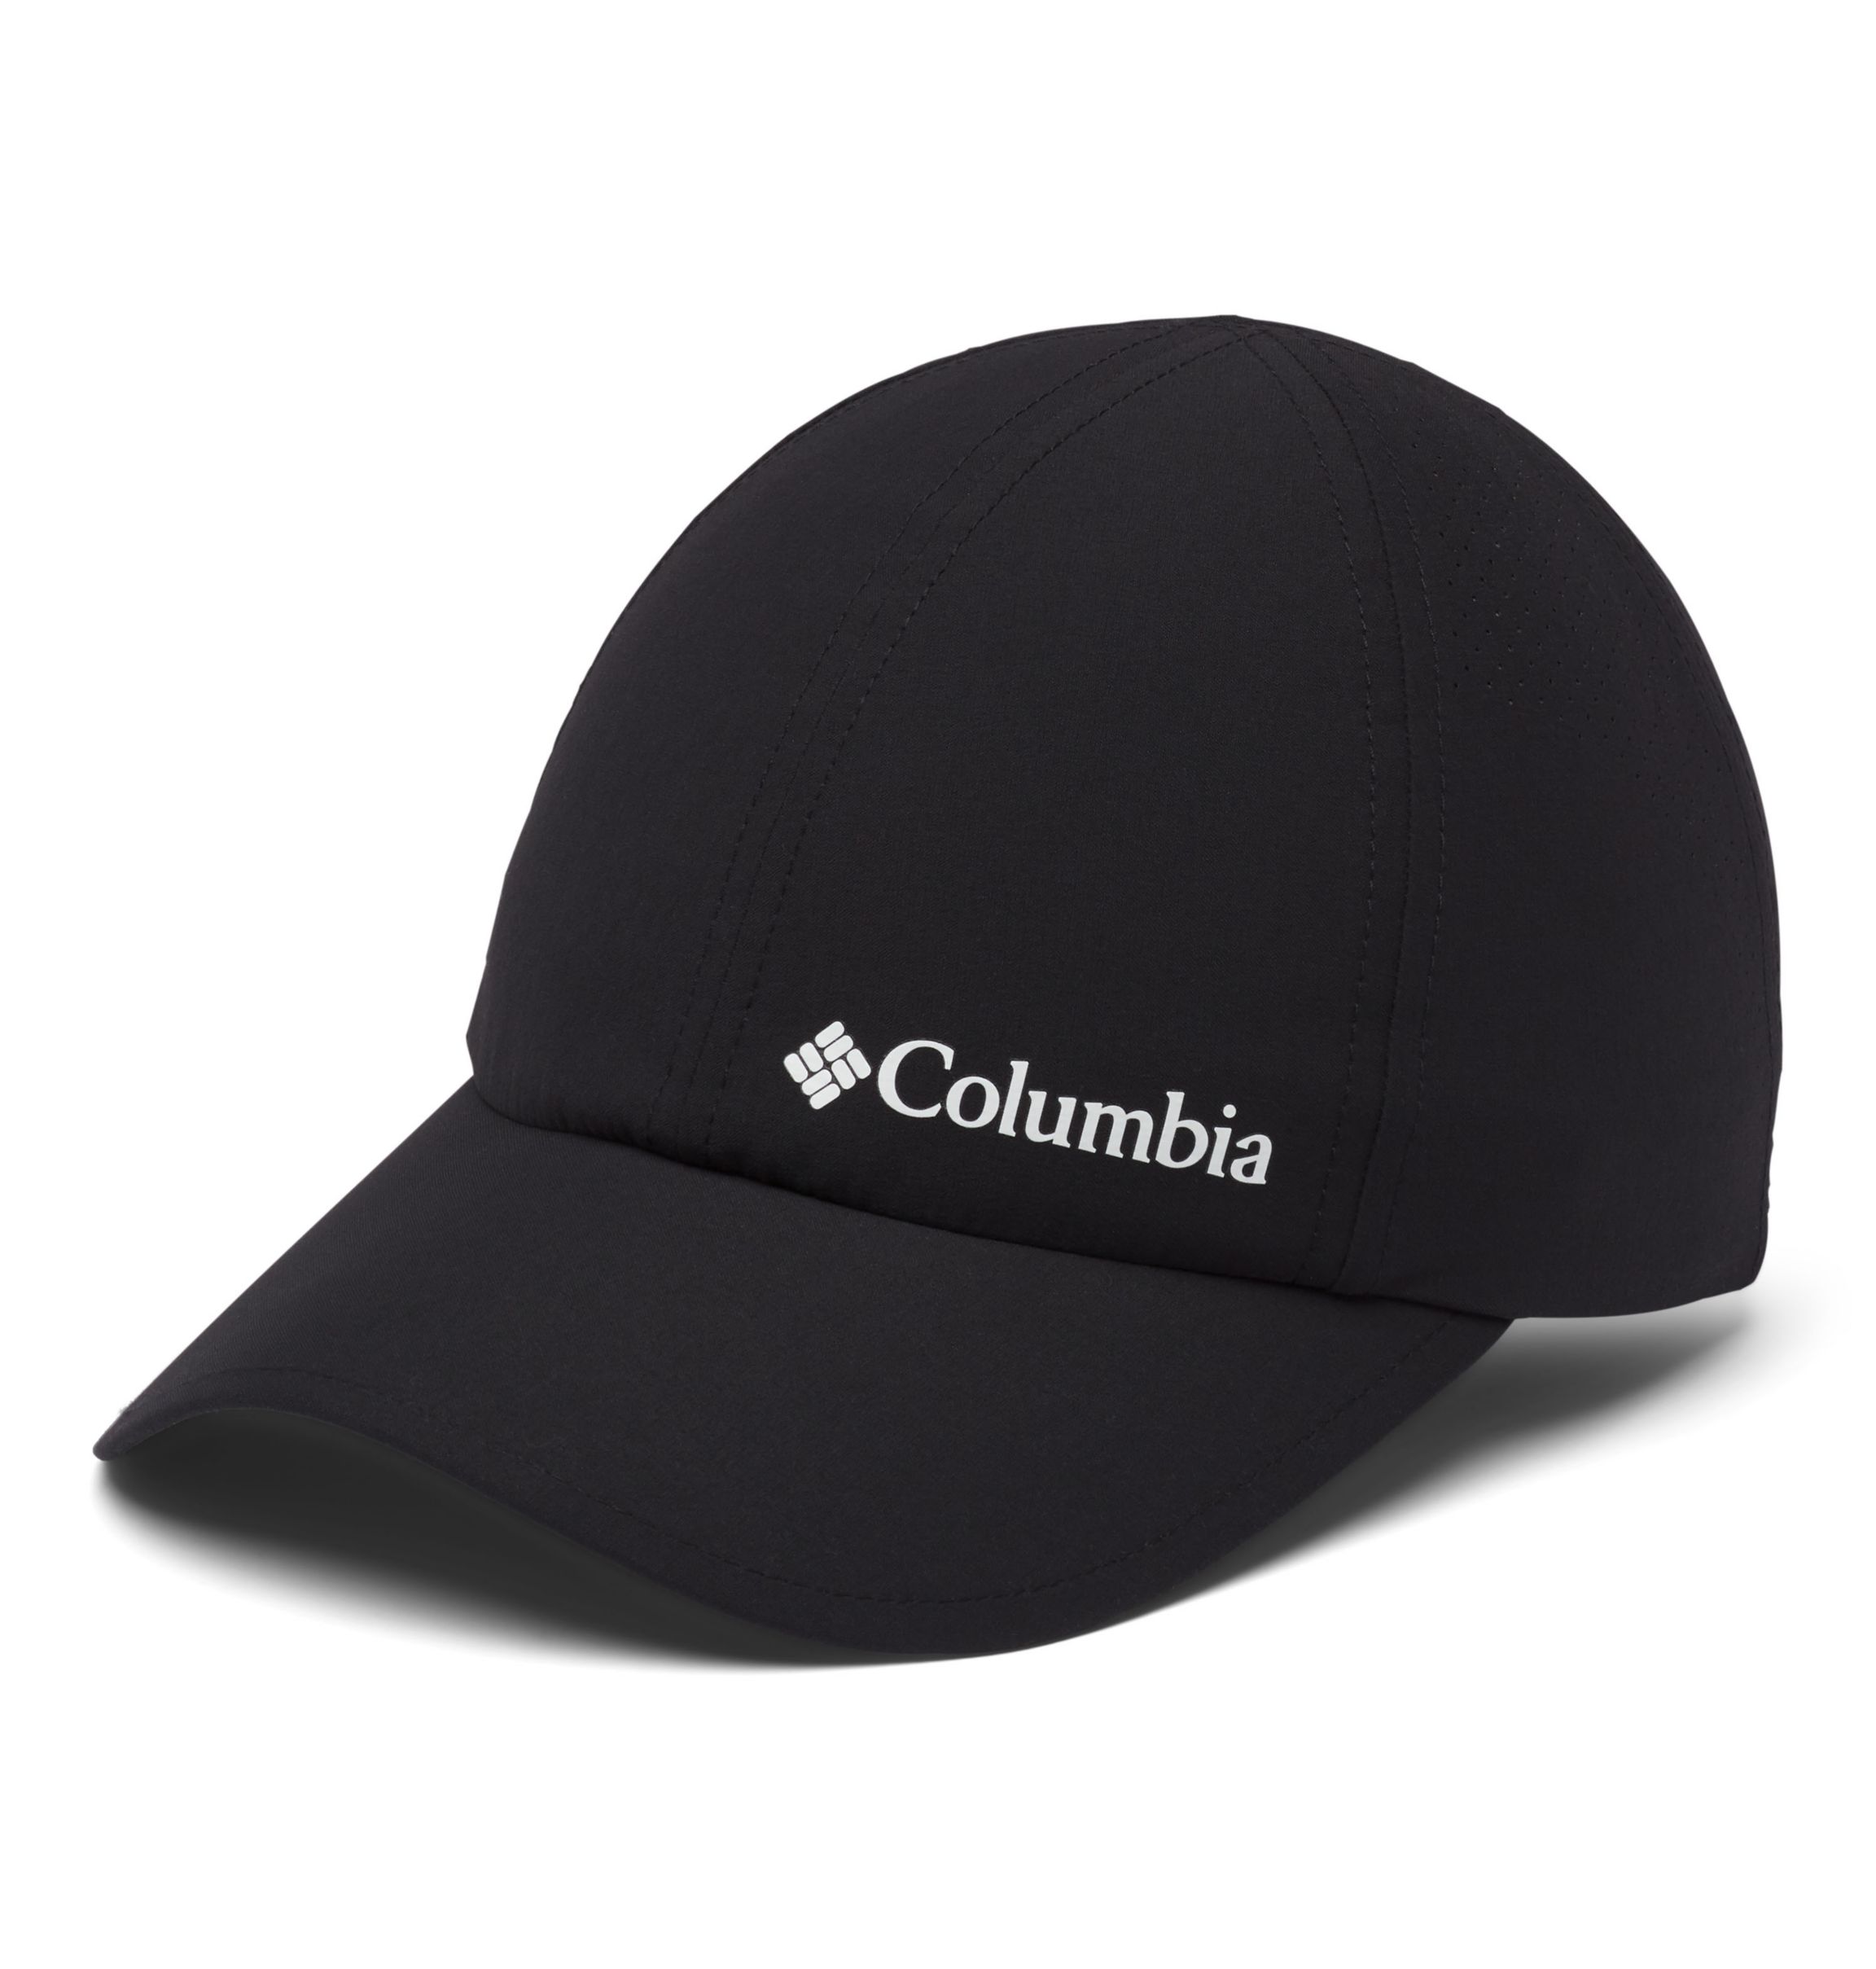  Columbia Unisex Silver Ridge III Ball Cap, Auburn, One Size :  Sports & Outdoors